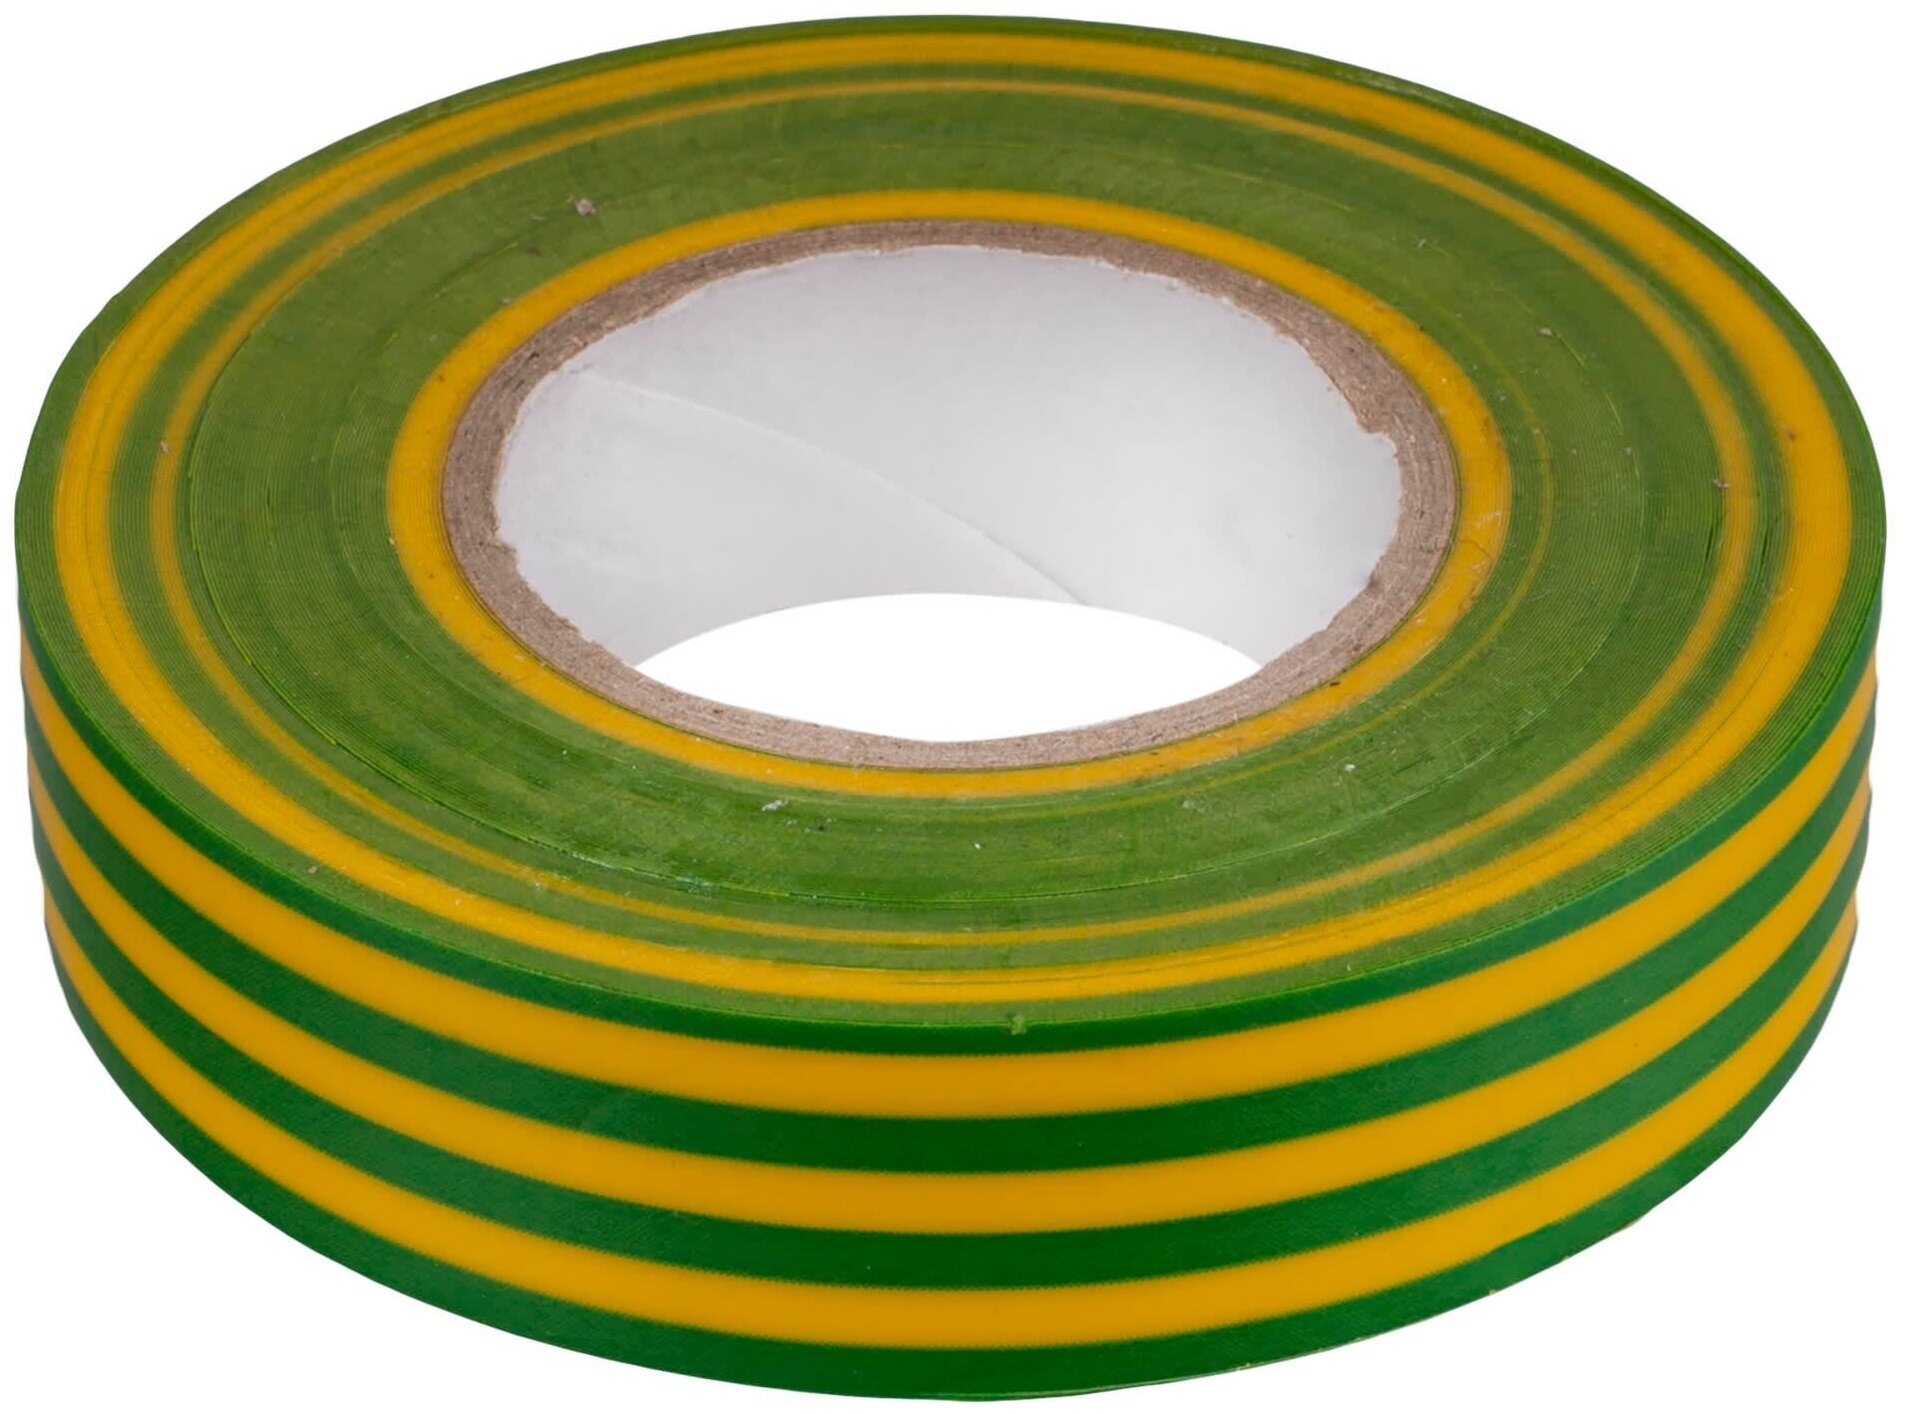 Изолента ПВХ 19 мм желто-зеленый (20 м)